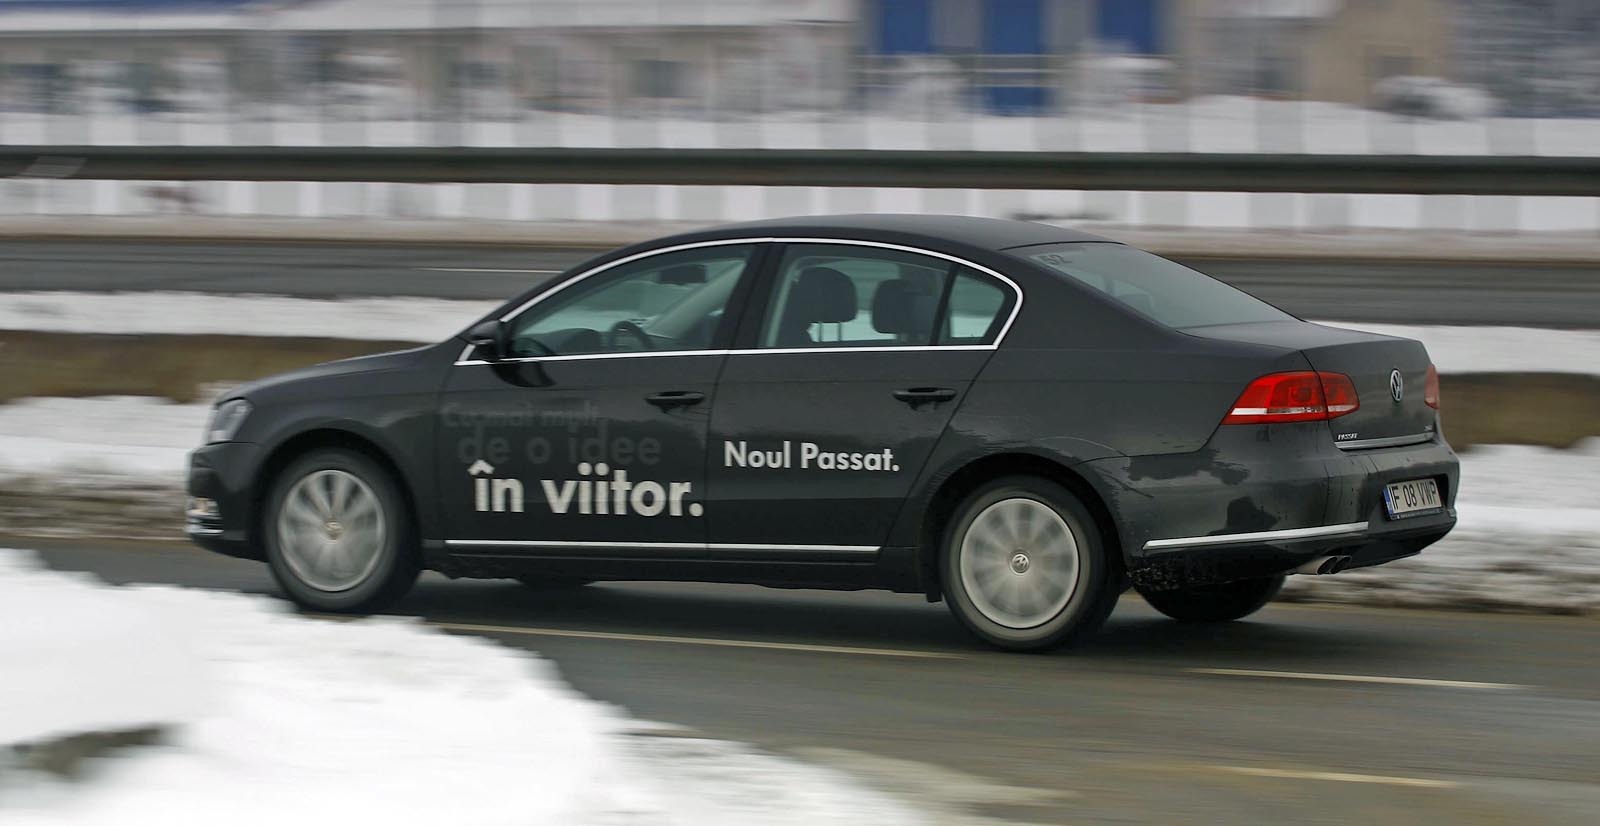 Ford Mondeo si Opel Insignia au o suspensie mai confortabila decat VW Passat